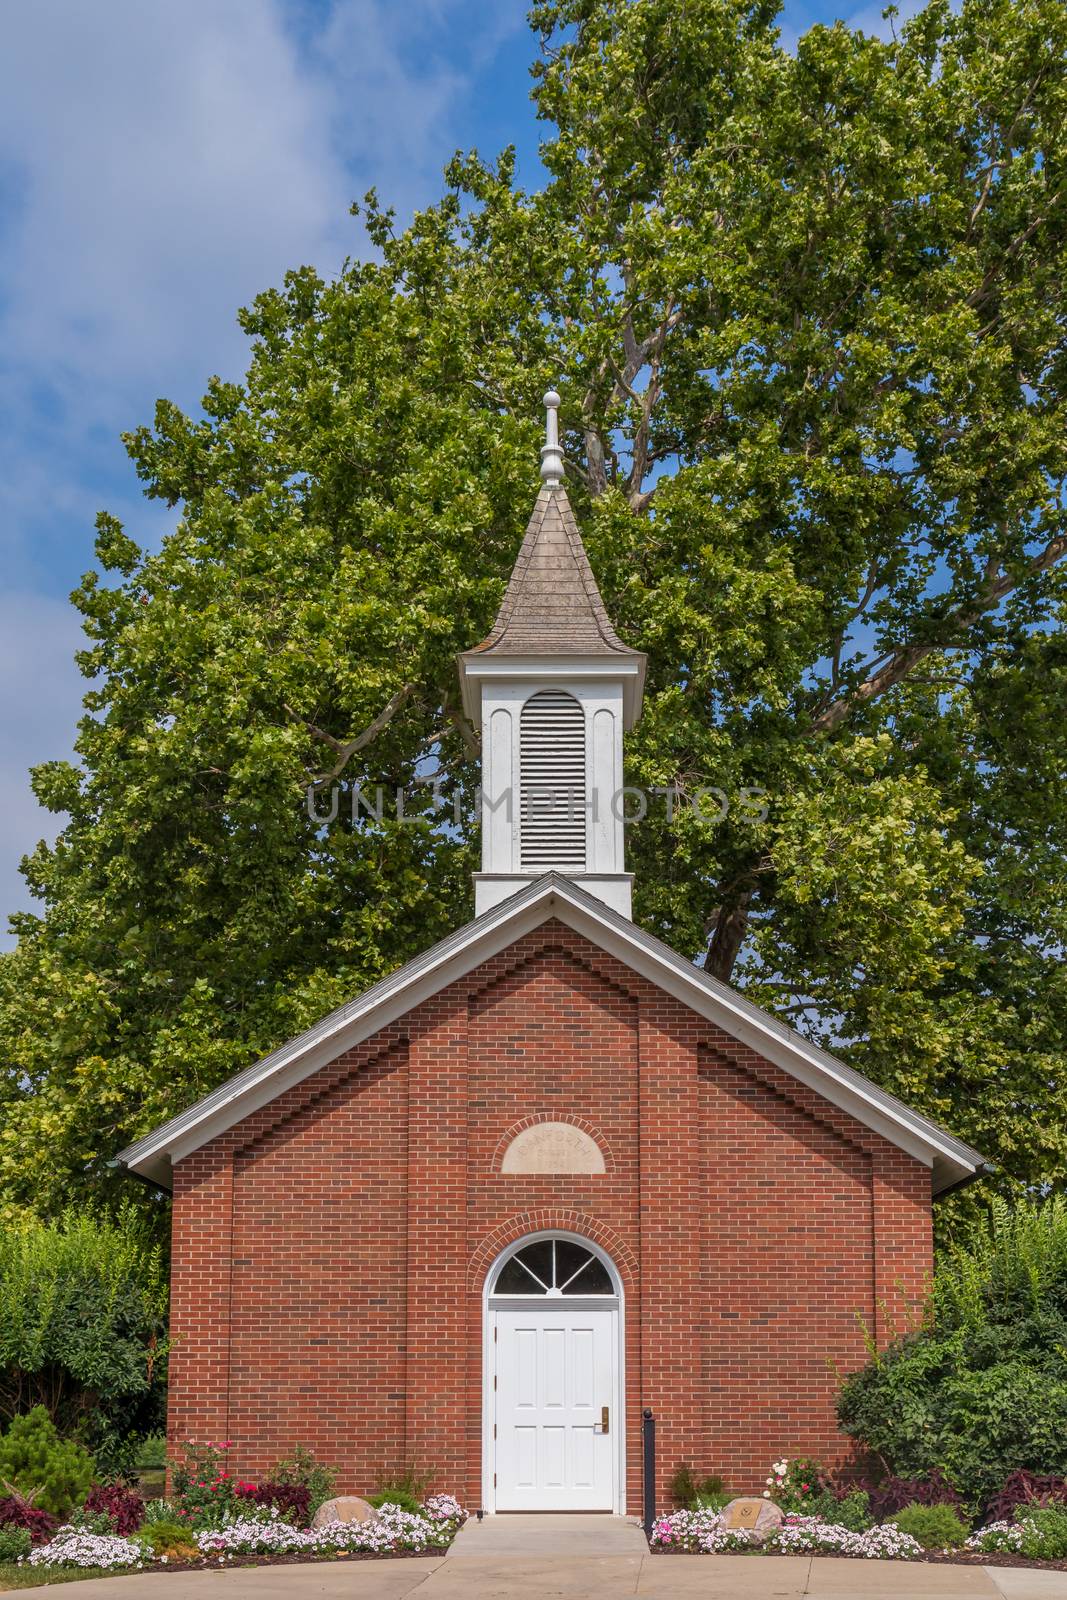 IOWA CITY, IA/USA - AUGUST 7, 2015: Danforth Chapel at the University of Iowa. The University of Iowa is a flagship public research university.